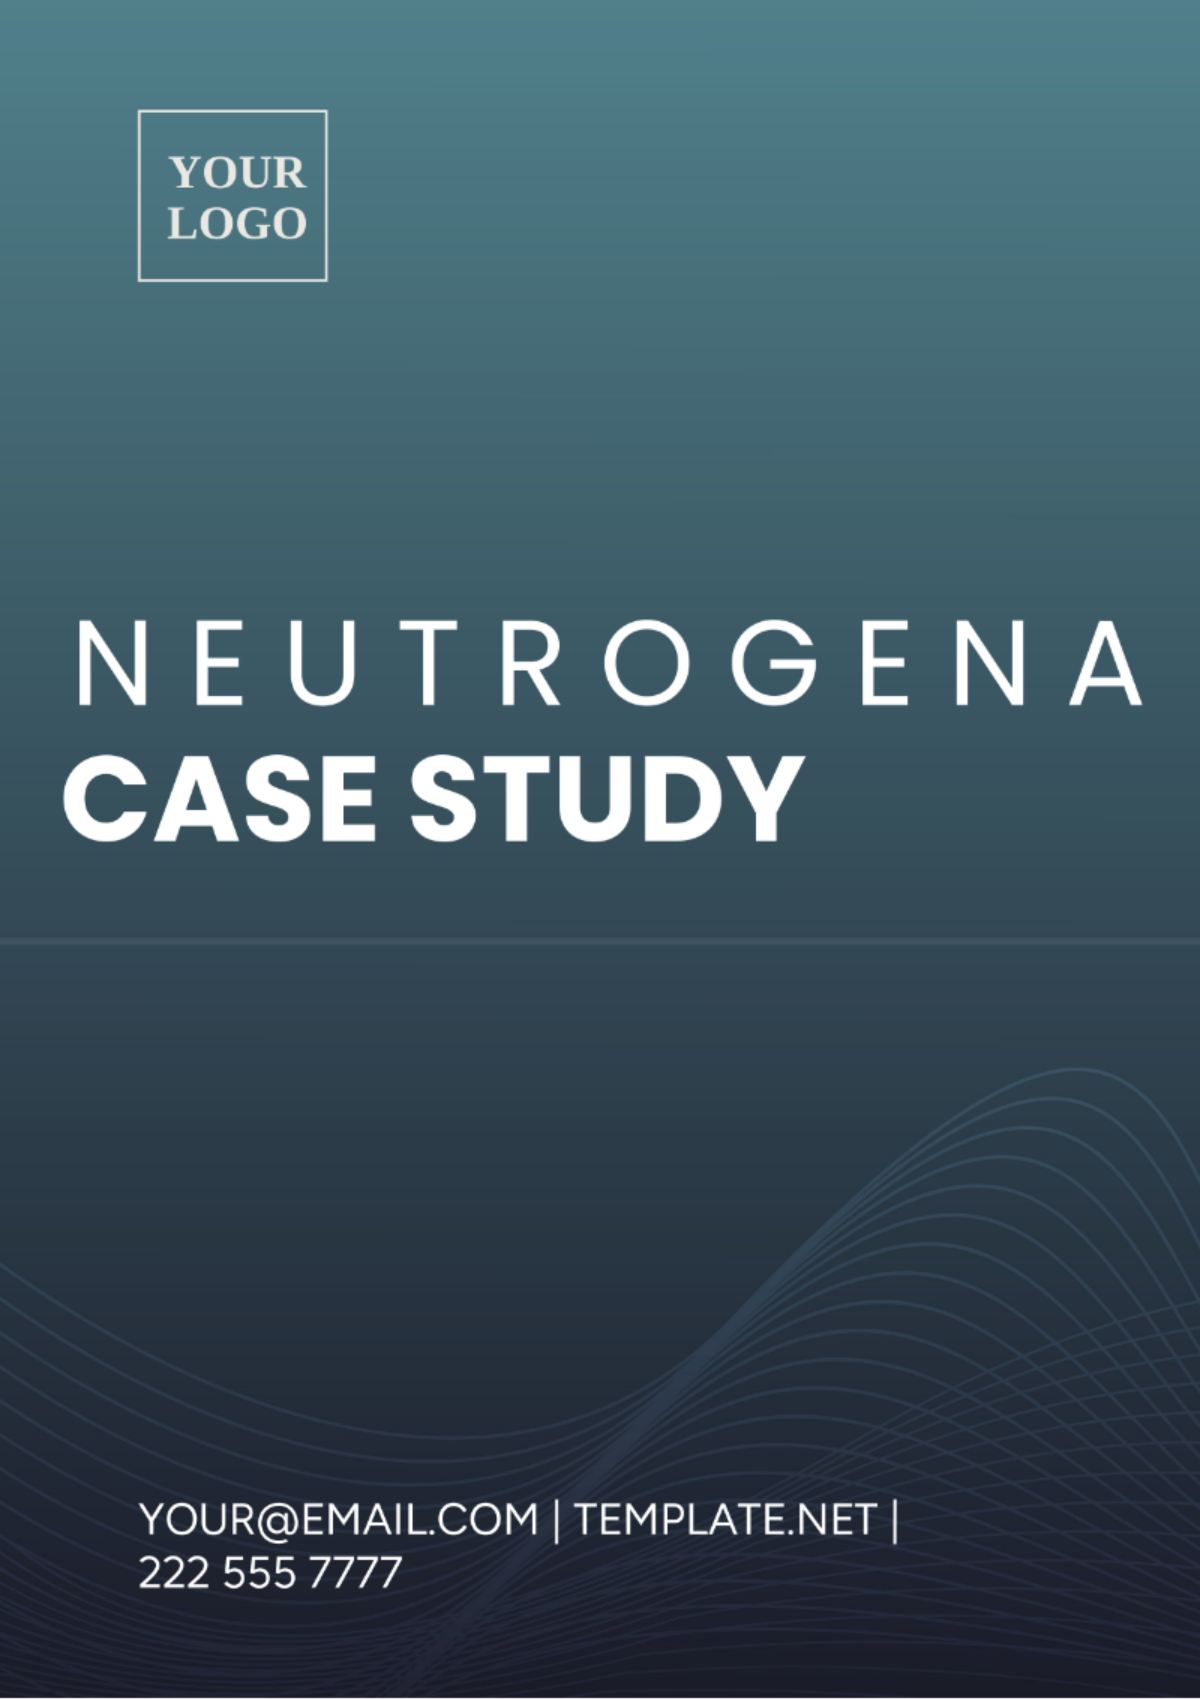 Neutrogena Case Study Template